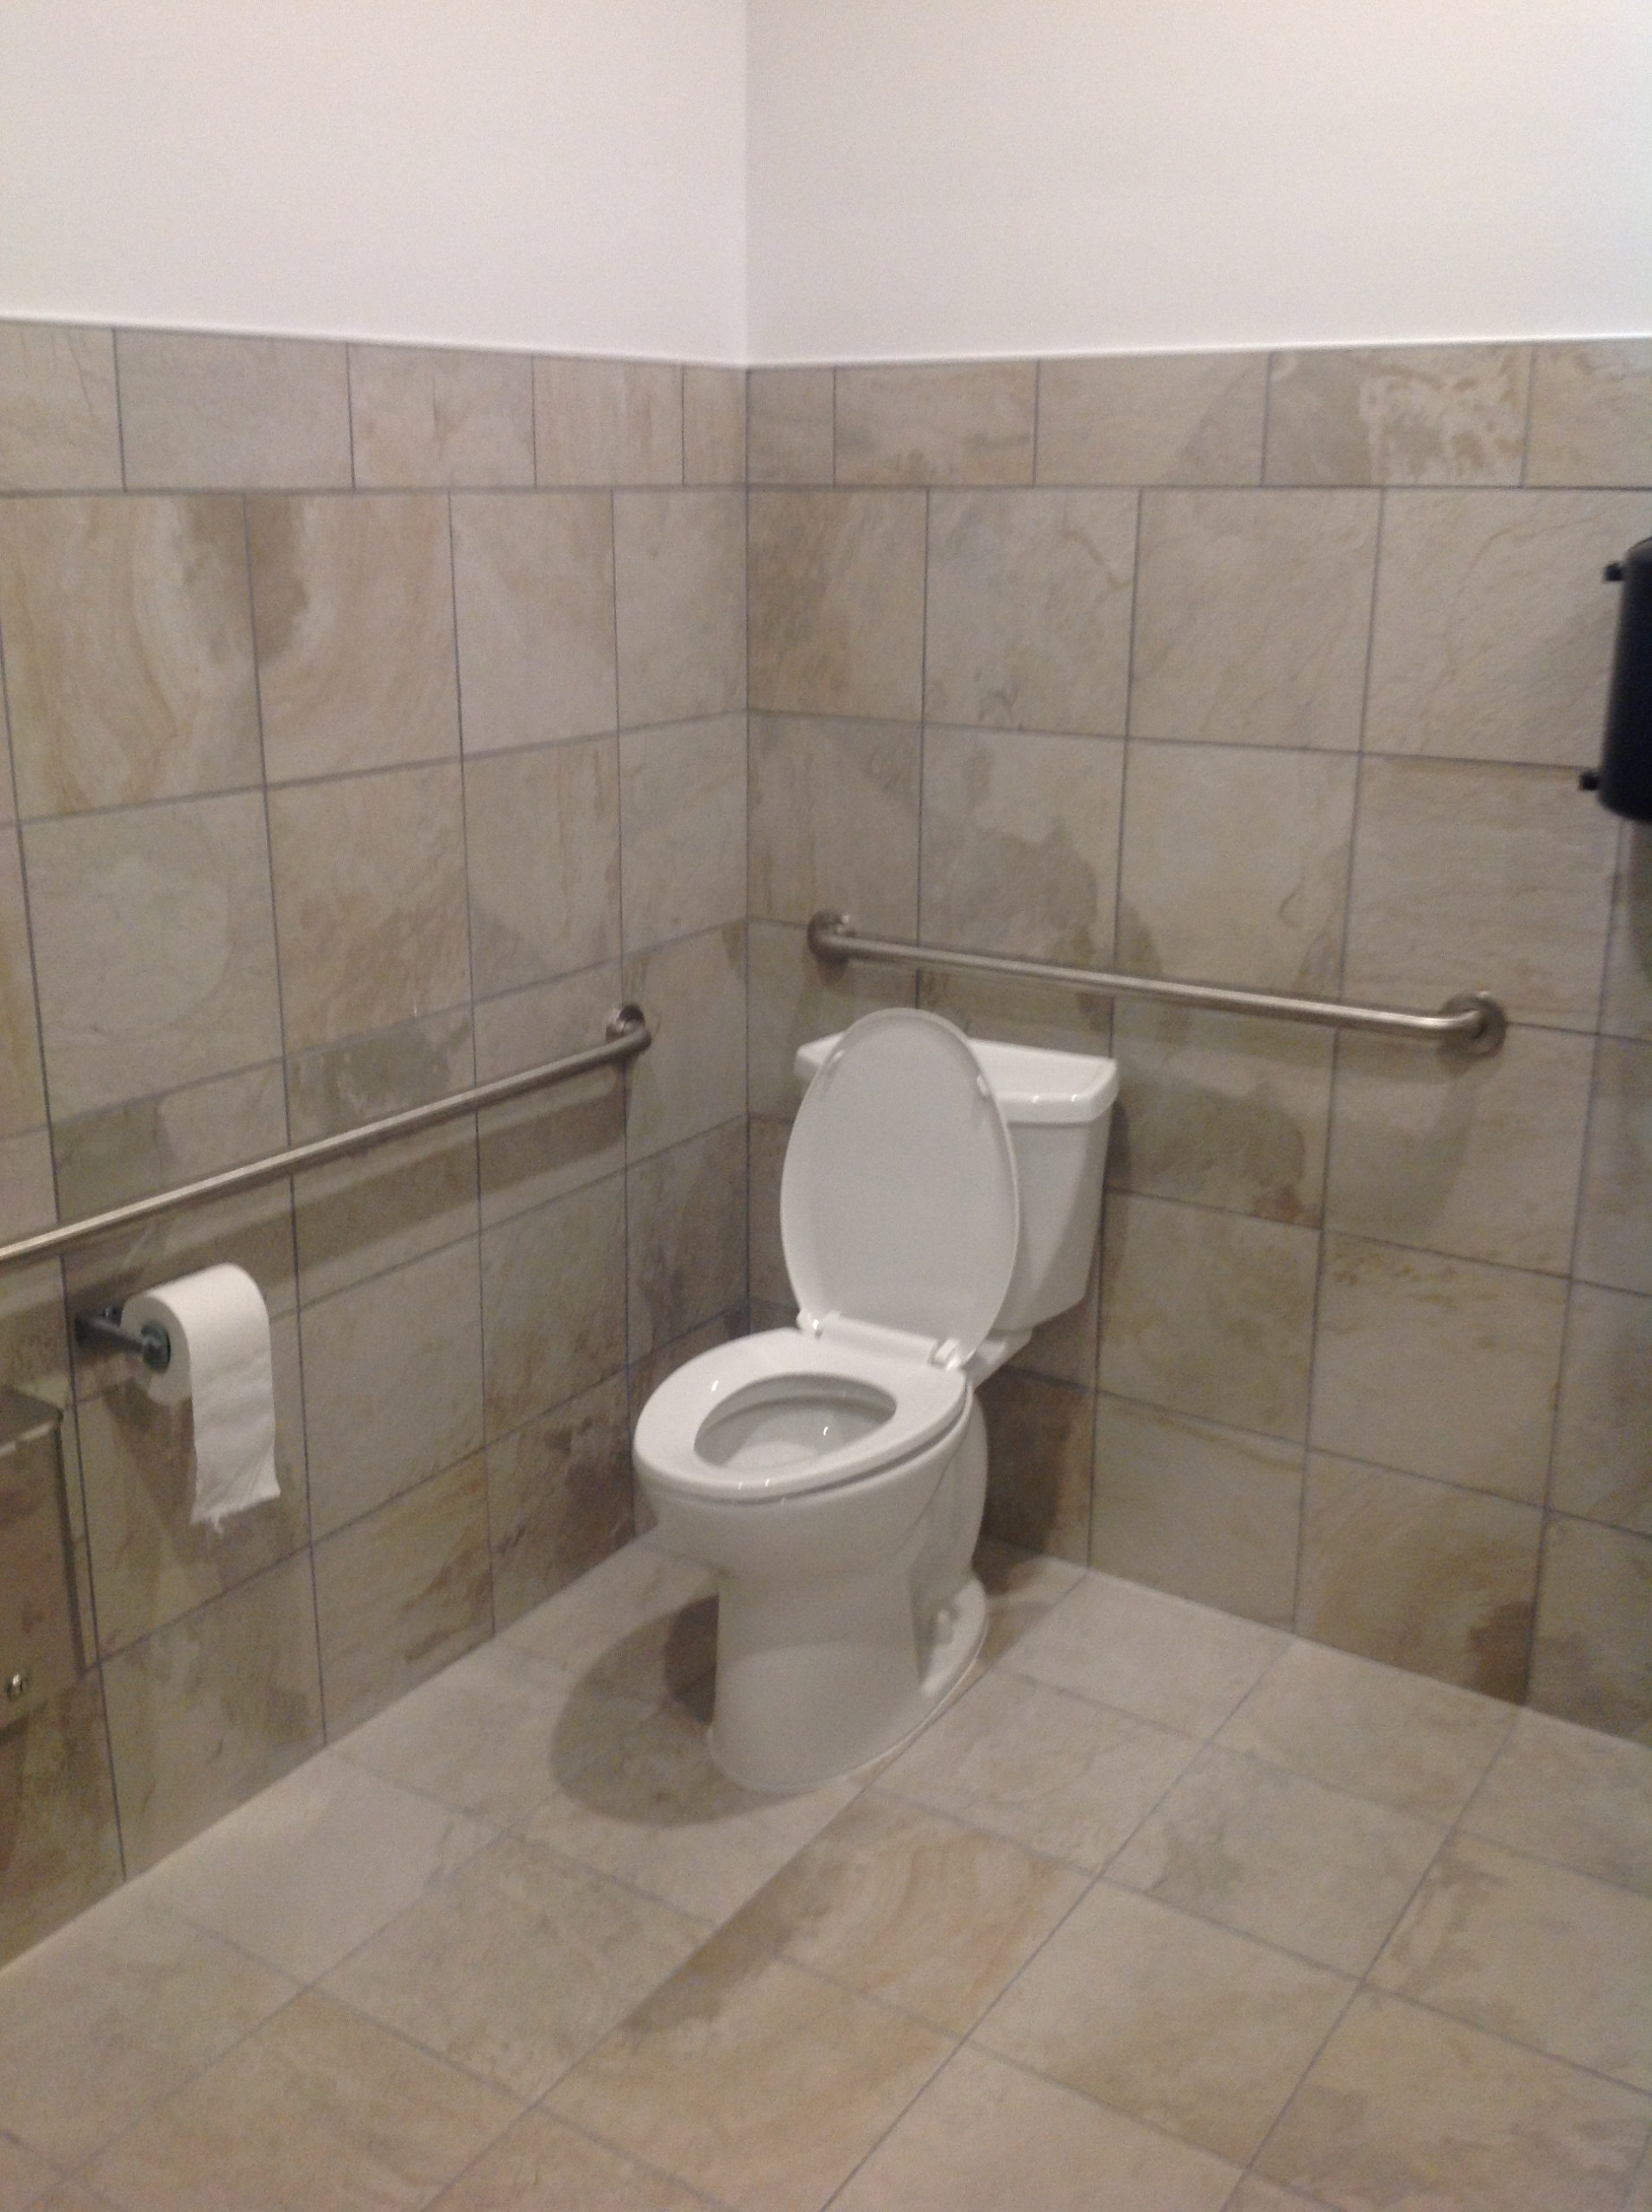 CC - Bathroom Remodel